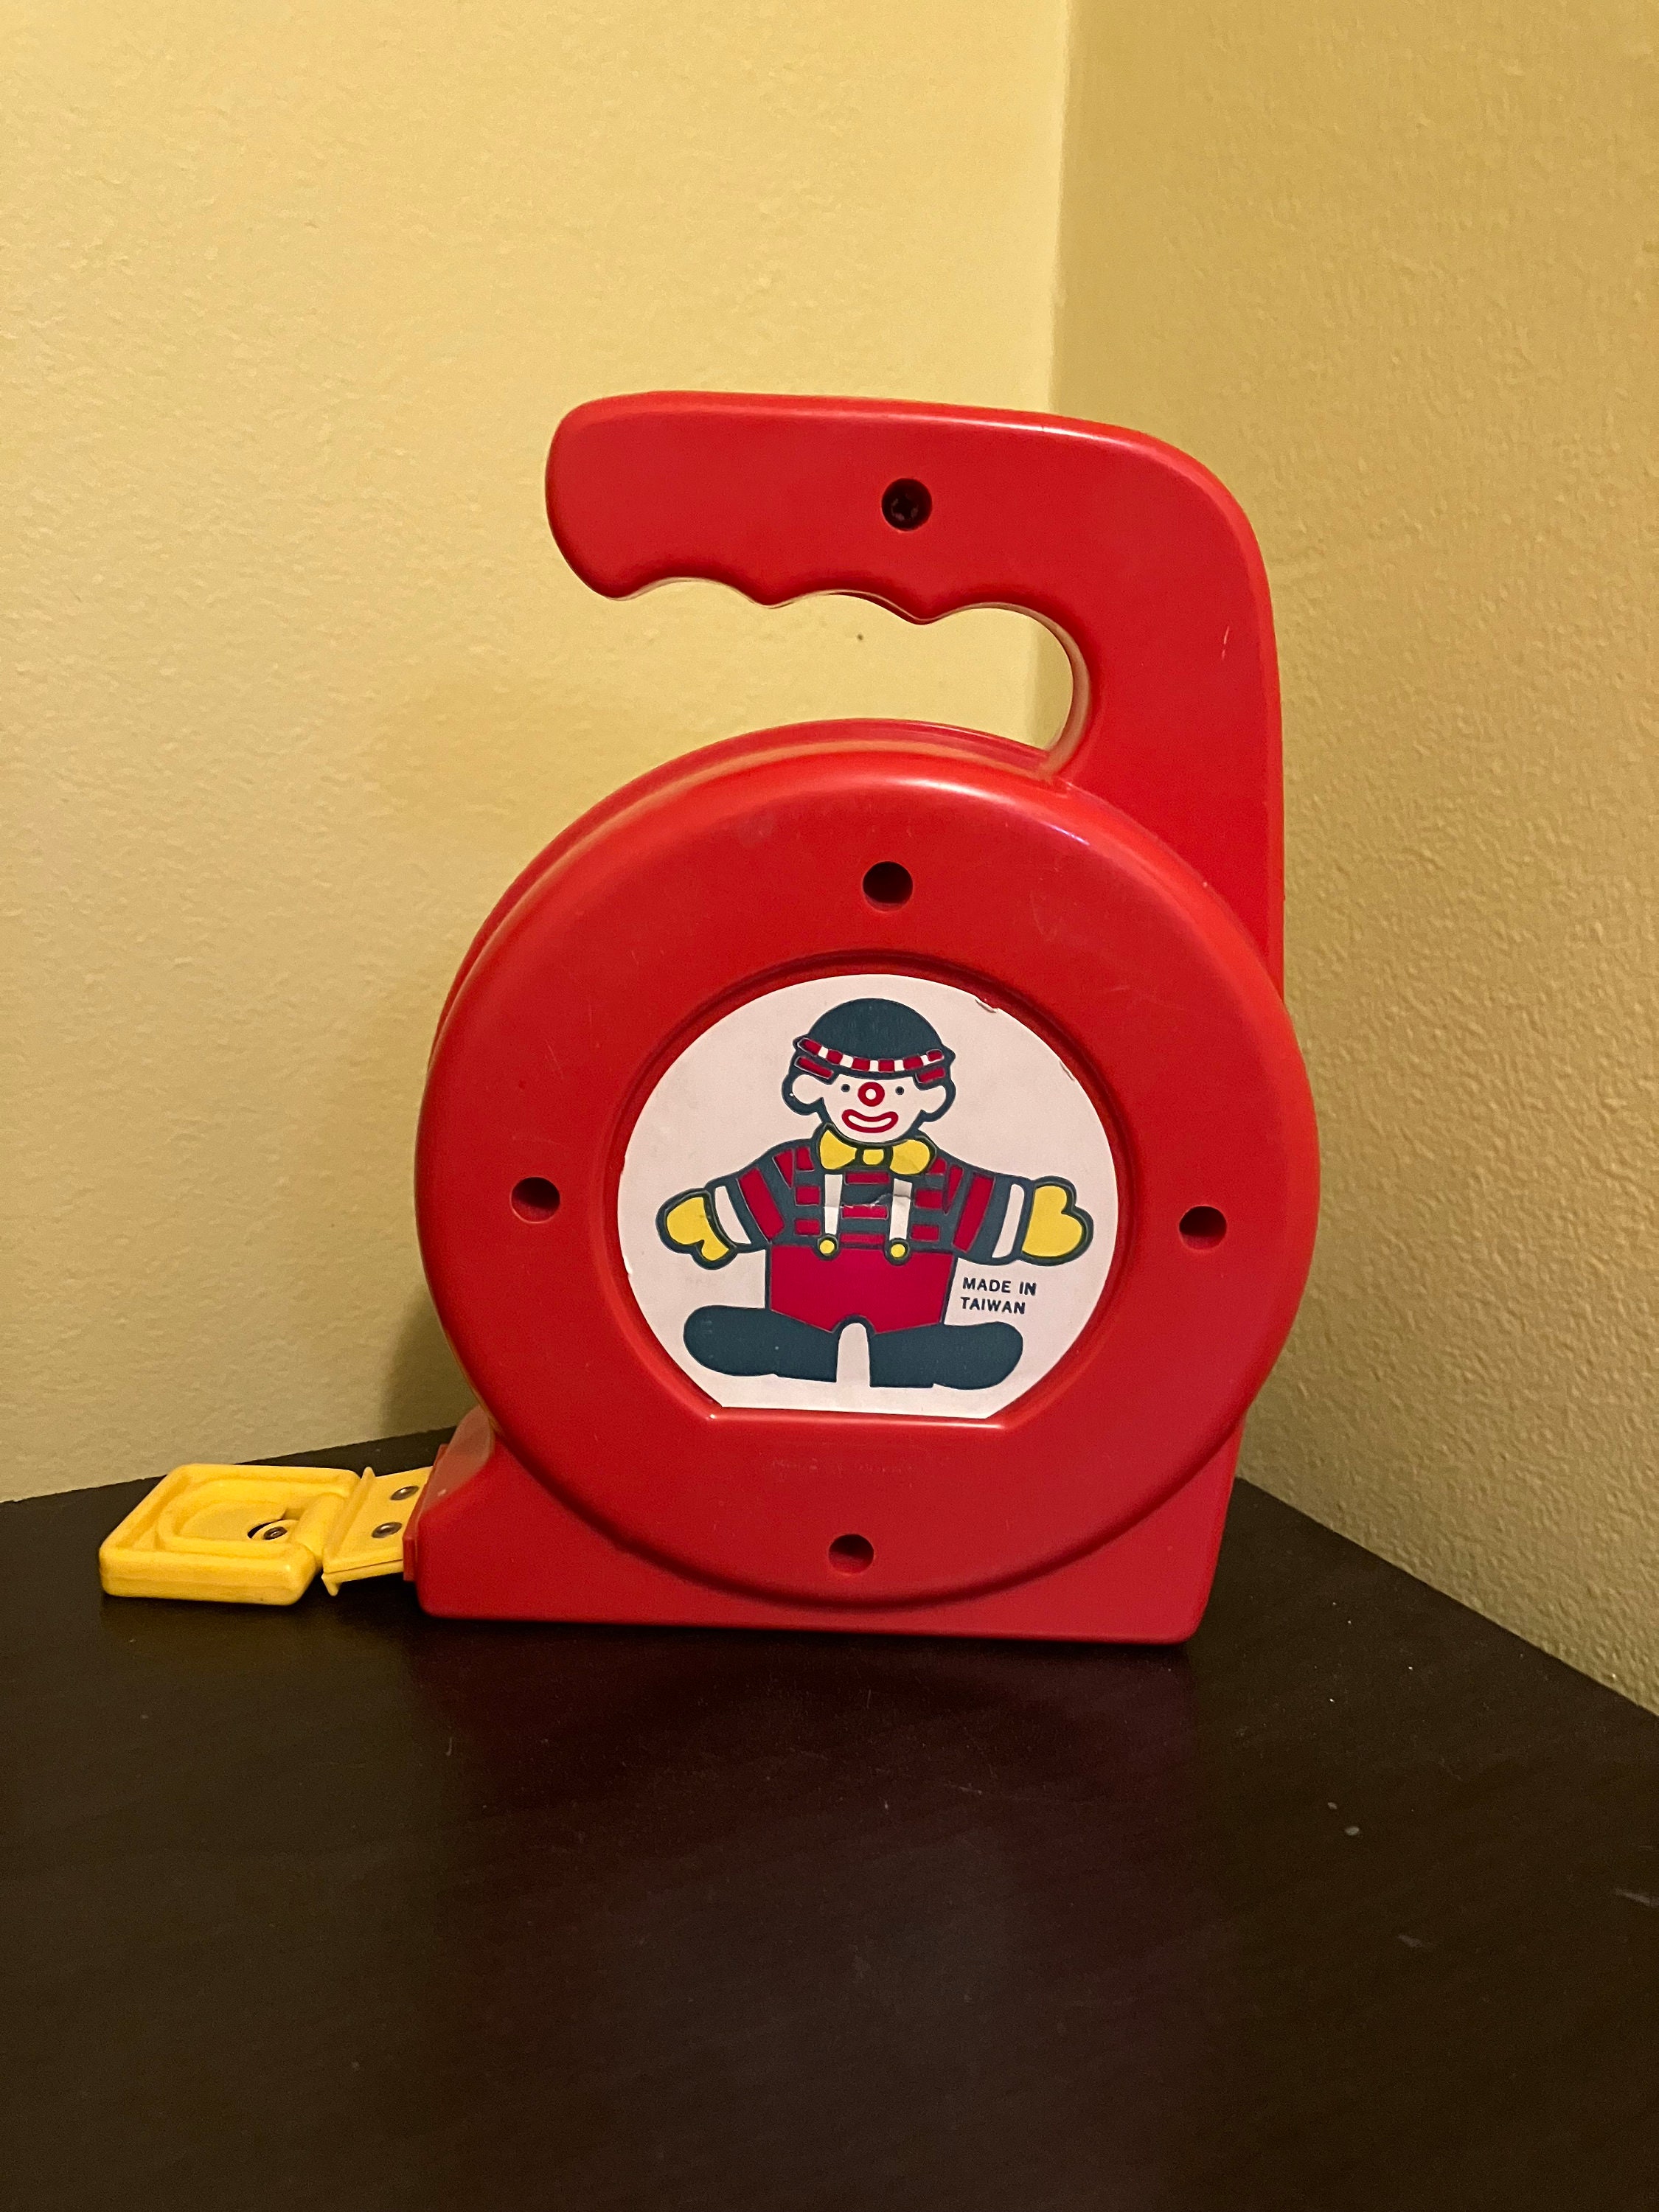 Mini Tape Measure, Cartoon Cute Tape Measure, Portable Meter Waist